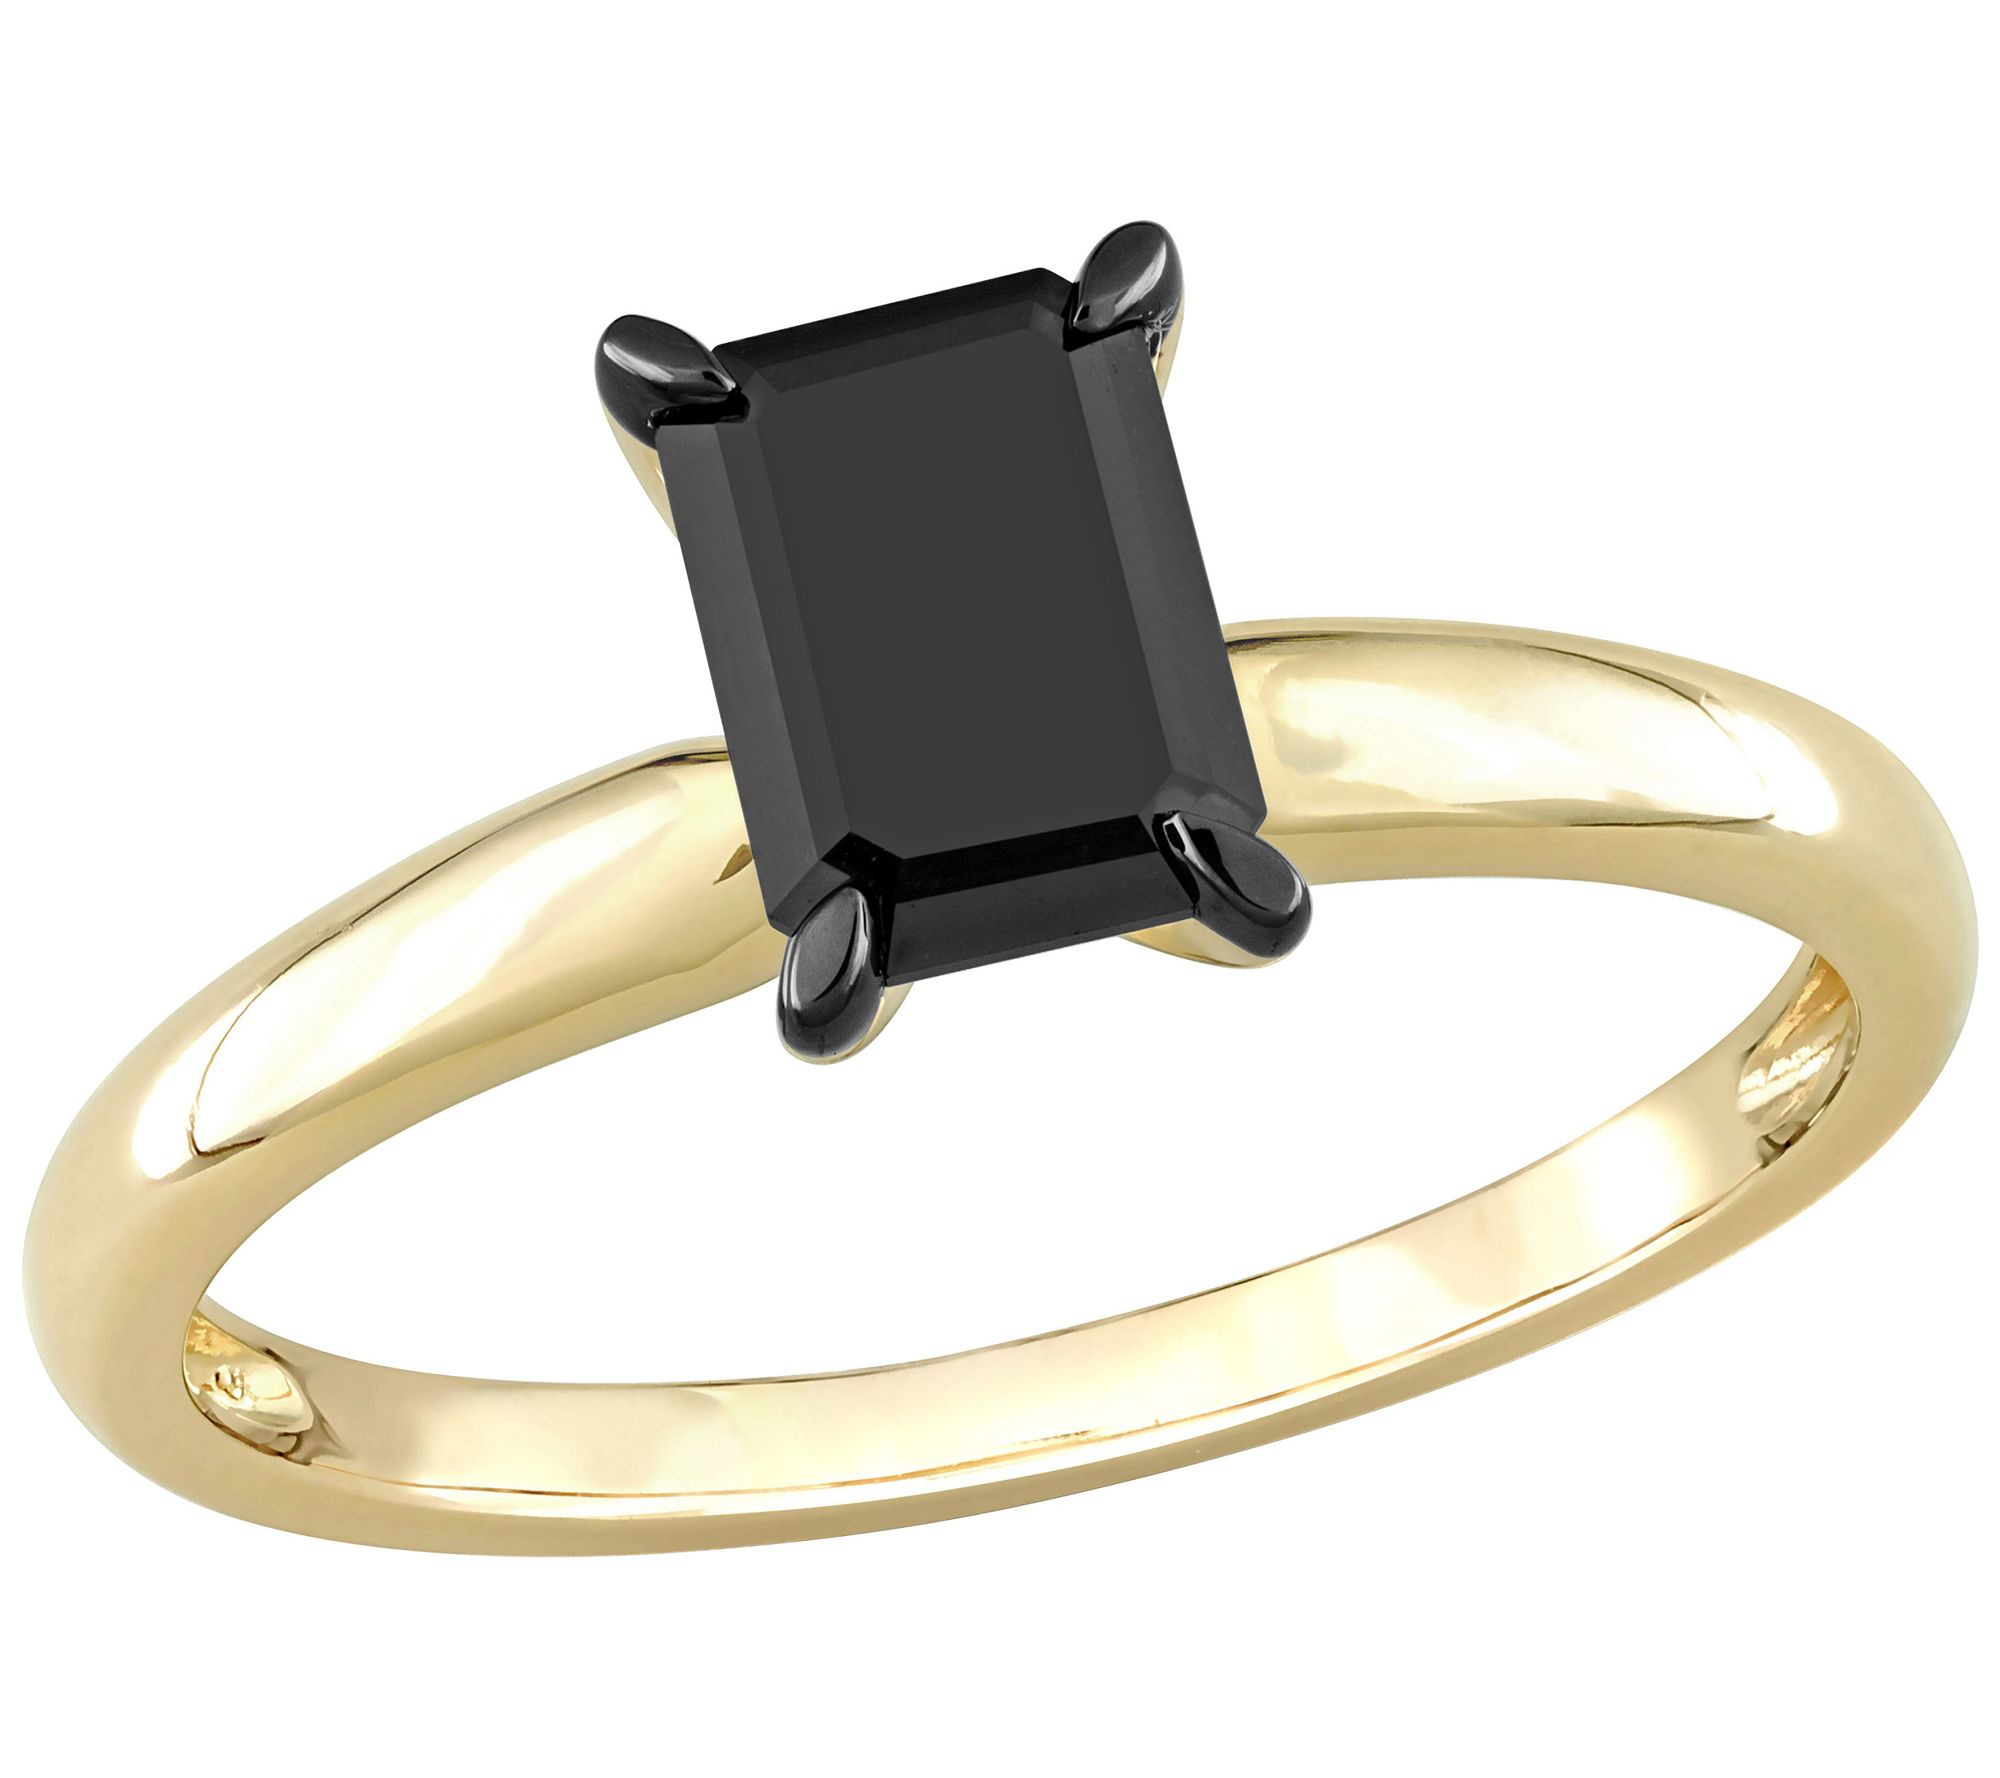 Affinity 1.00 cttw Black Diamond Ring, 14K Gold - QVC.com